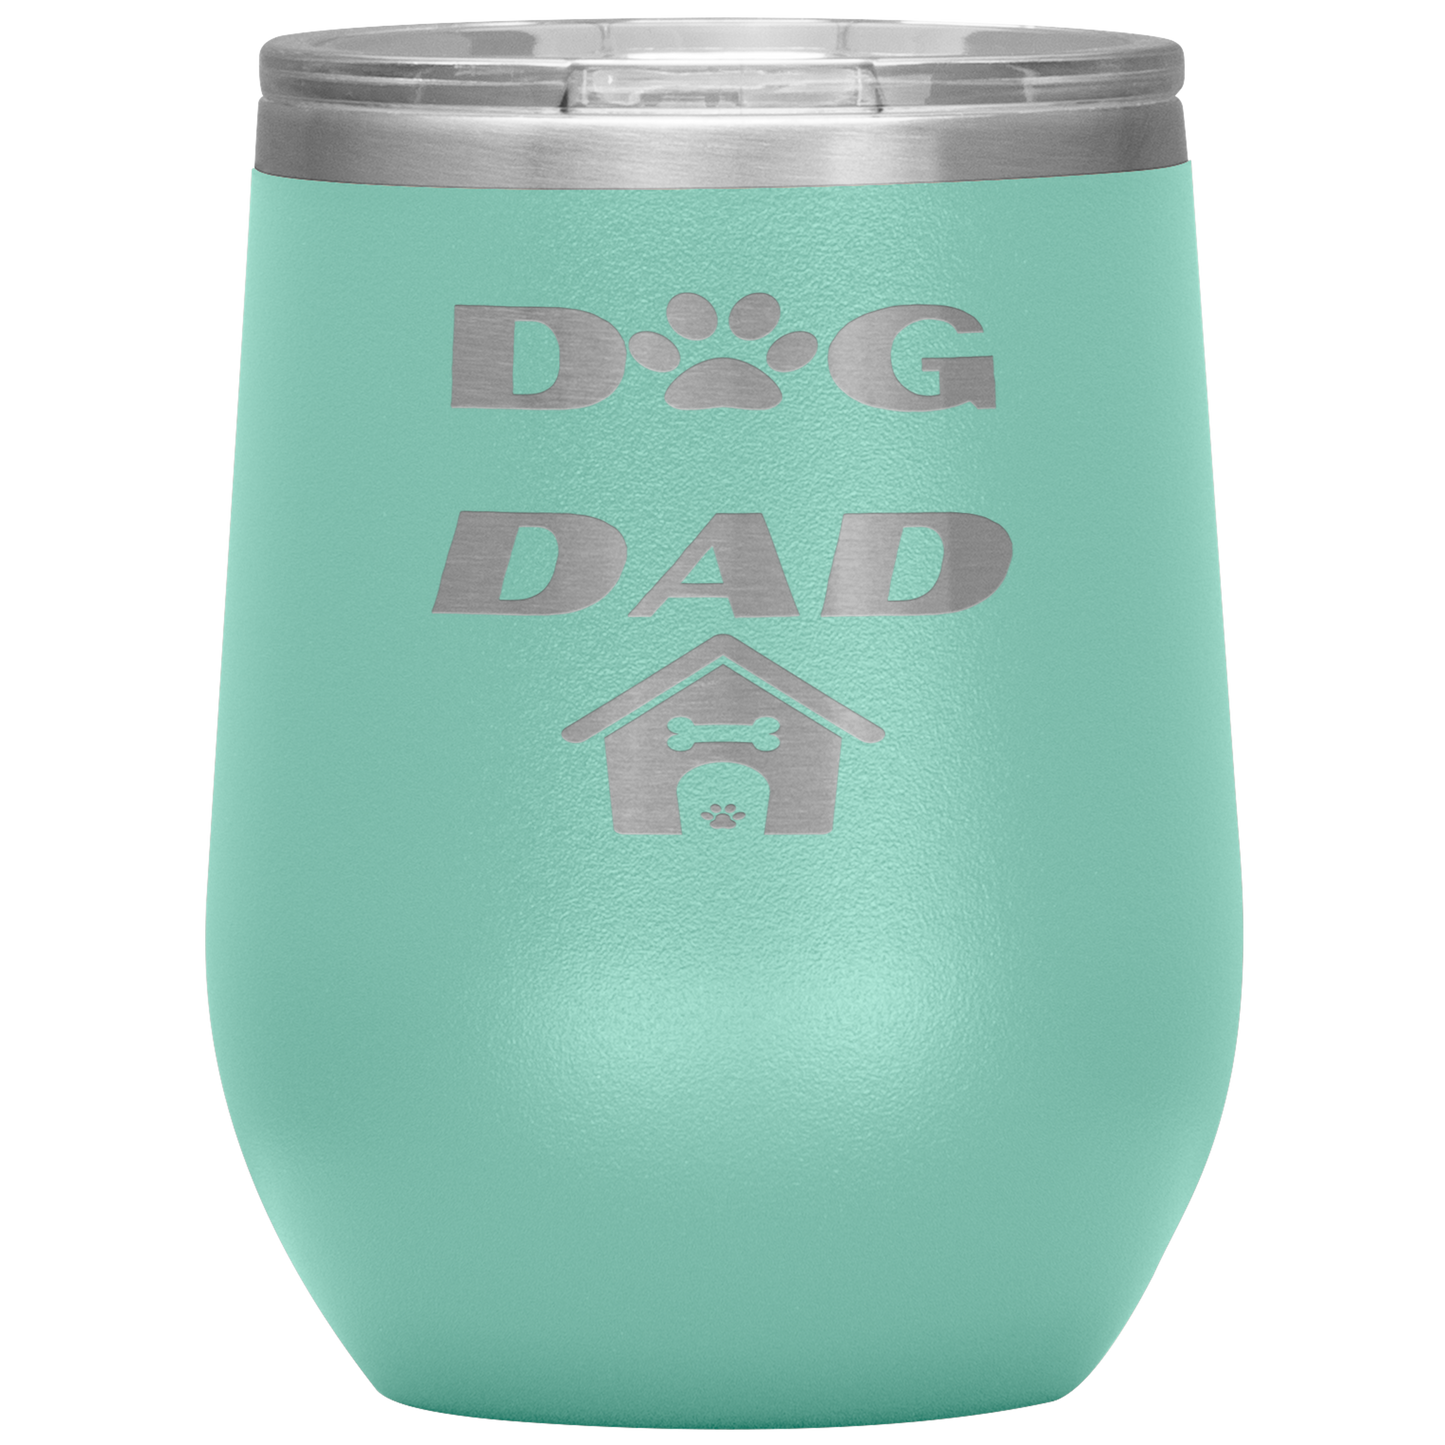 Dog Dad Wine Tumbler - Madison's Mutt Mall